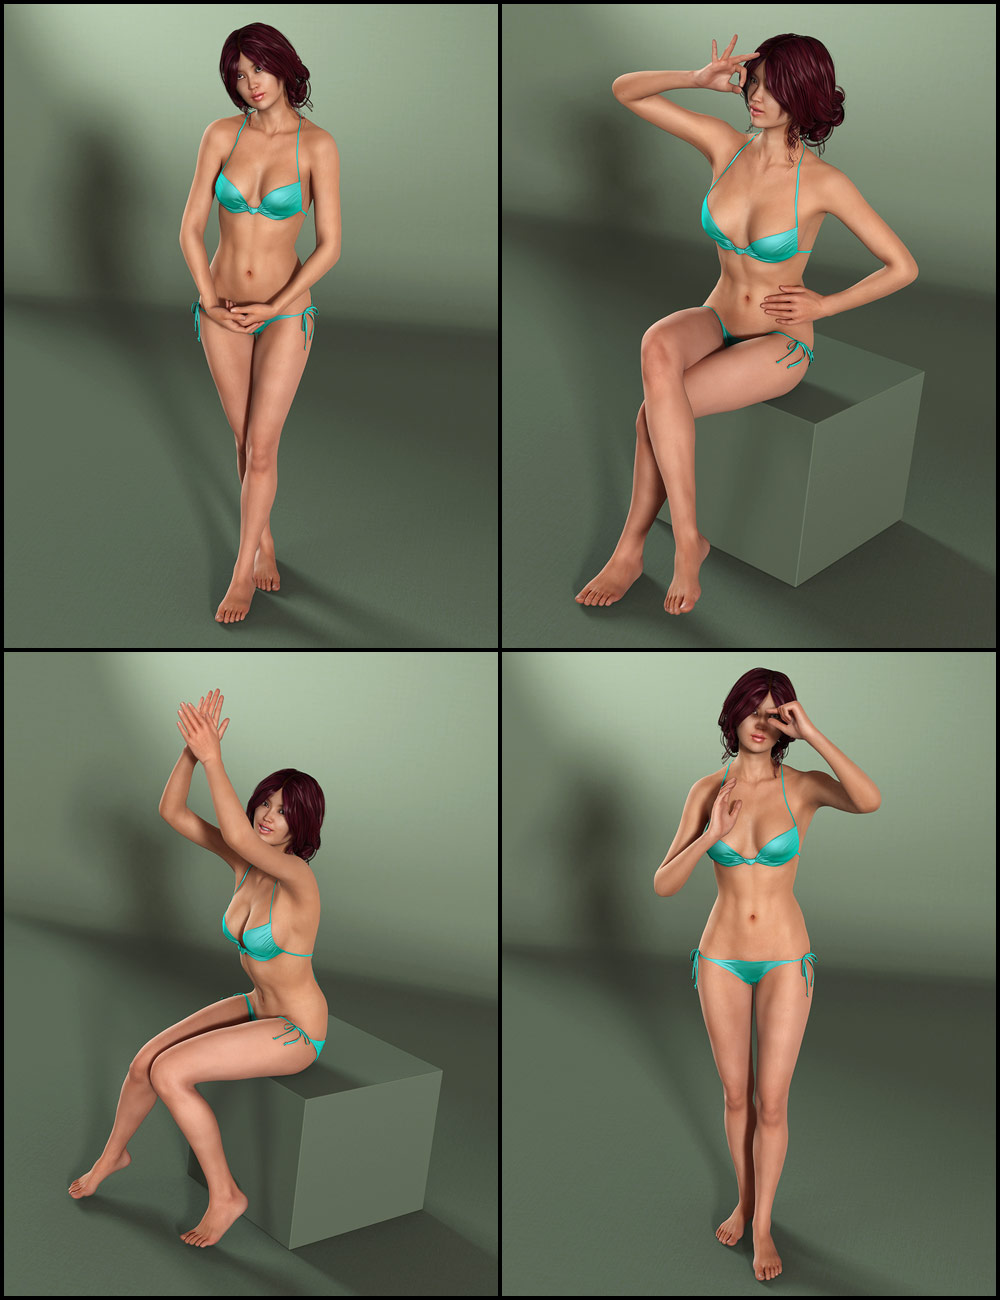 Cute 'n' Playful Poses for Mei Lin 6 by: blondie9999, 3D Models by Daz 3D